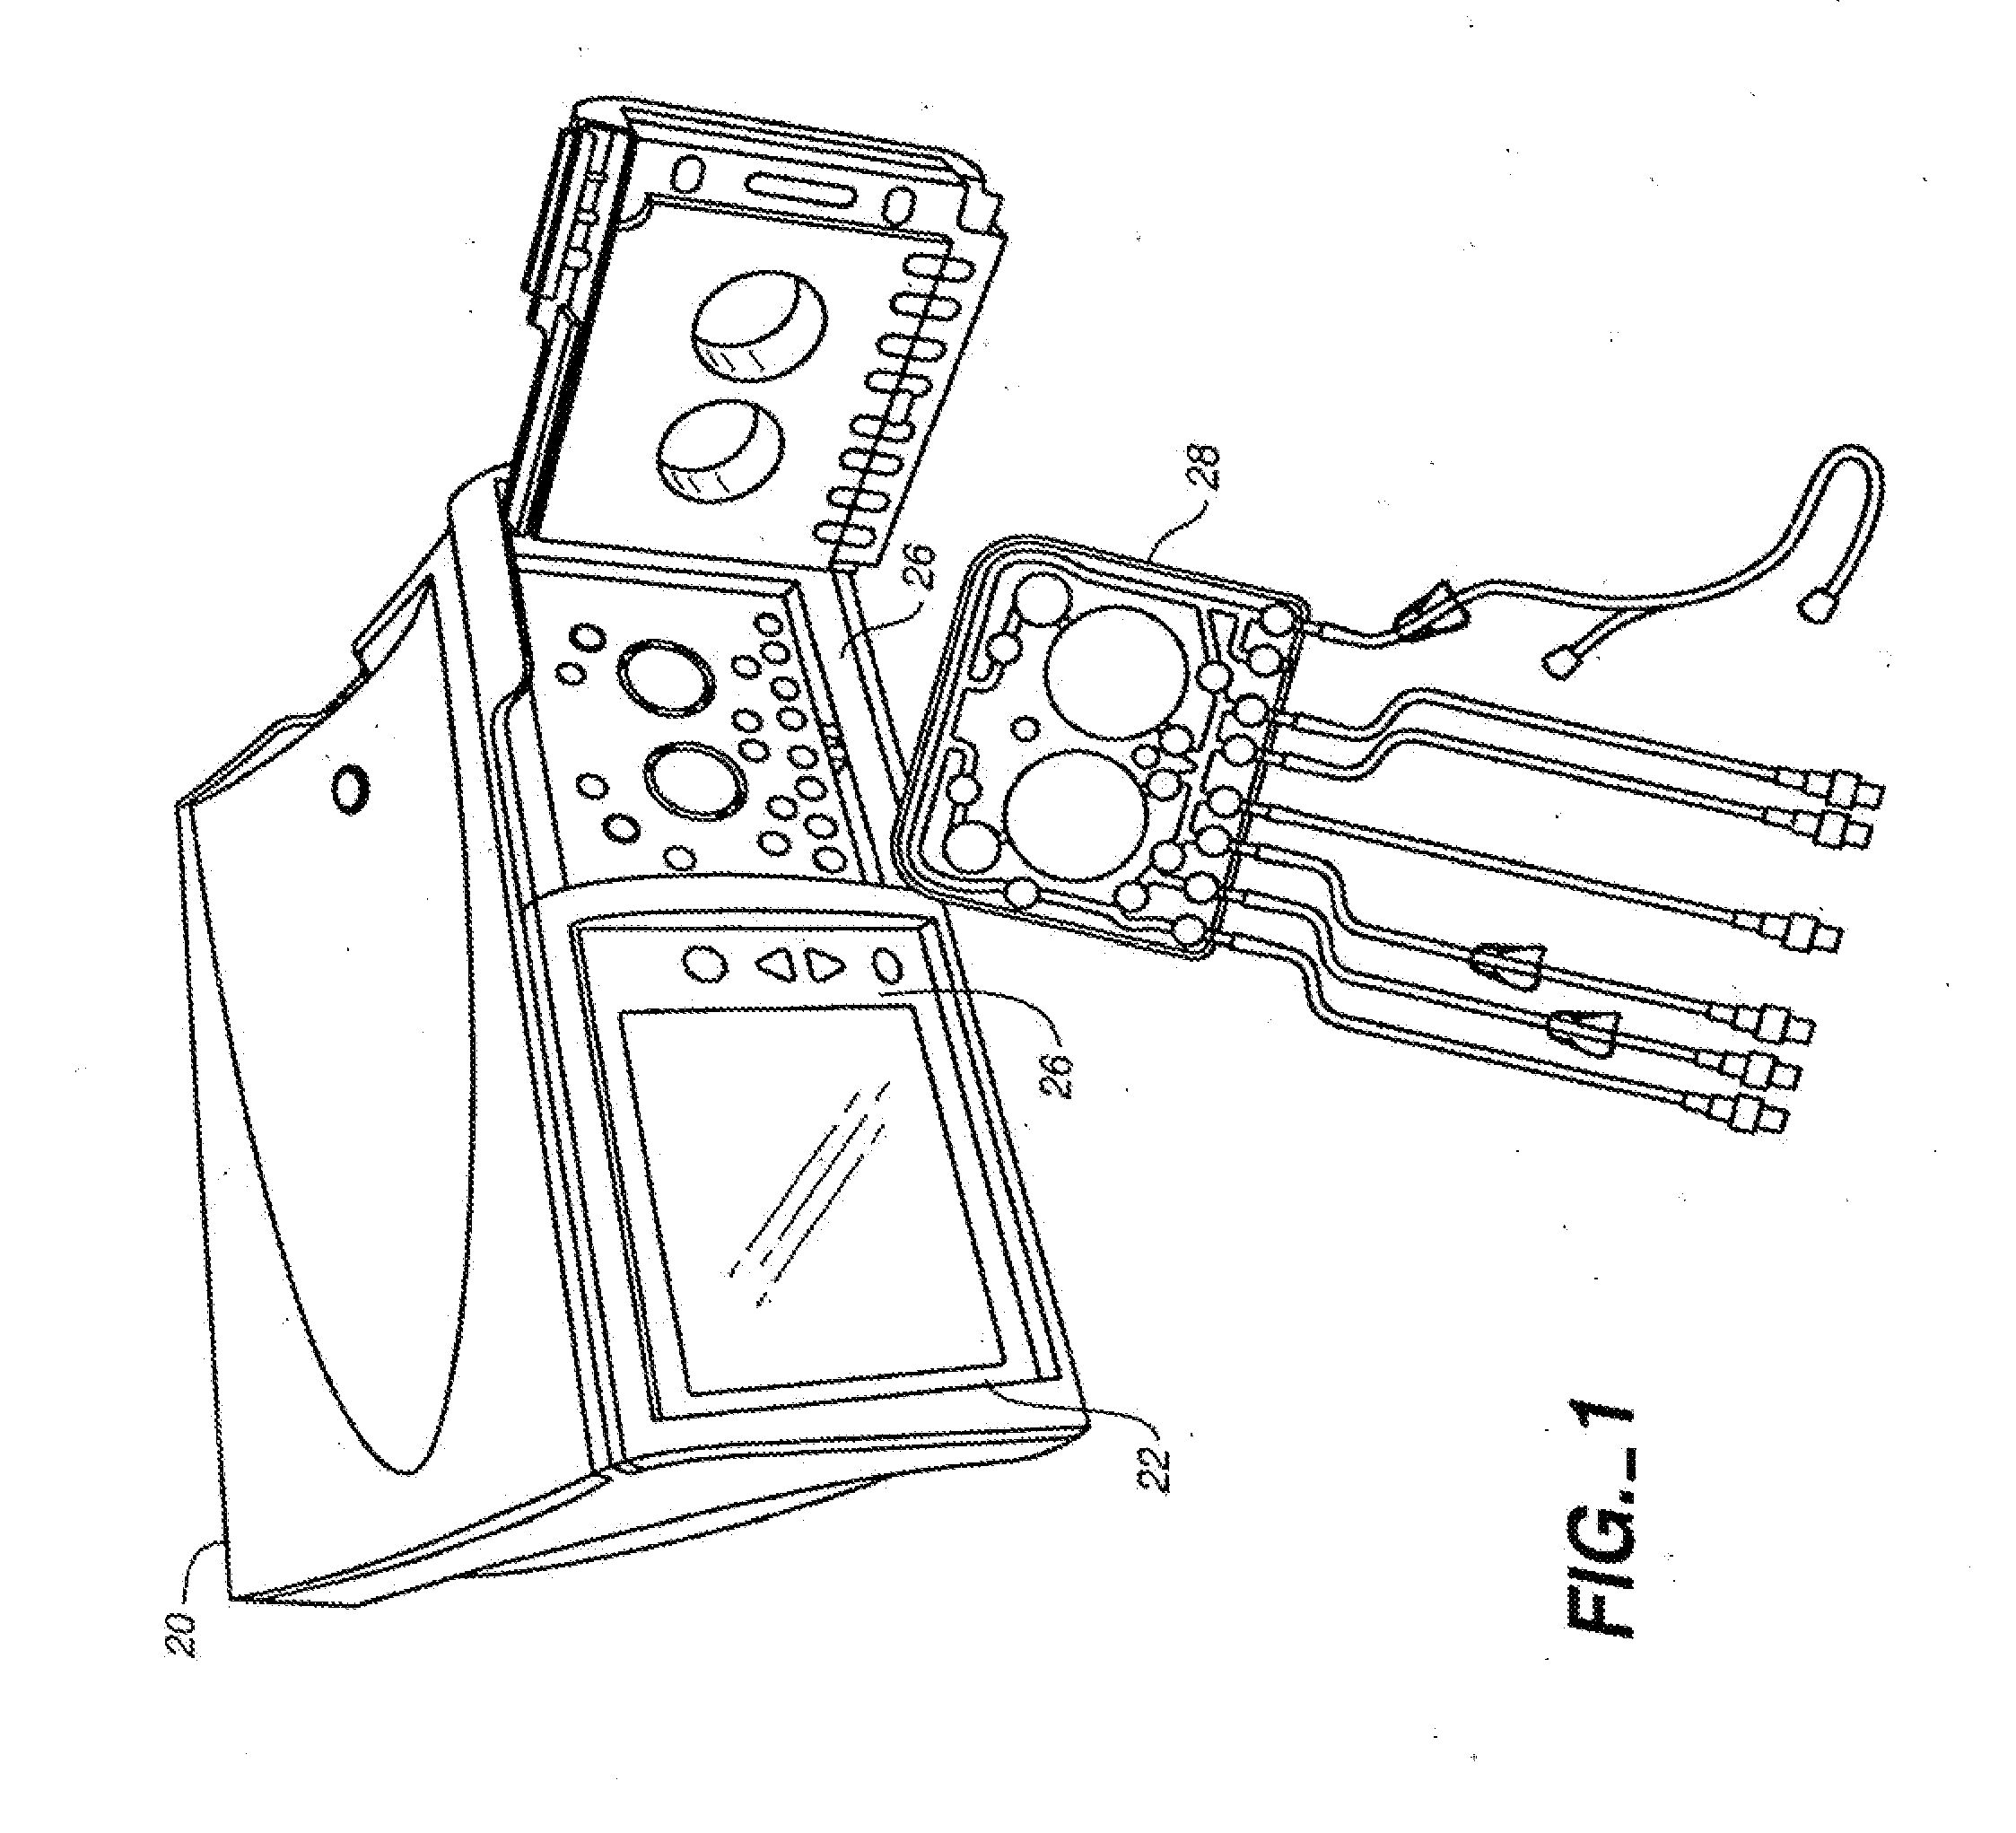 Portable apparatus for peritoneal dialysis therapy